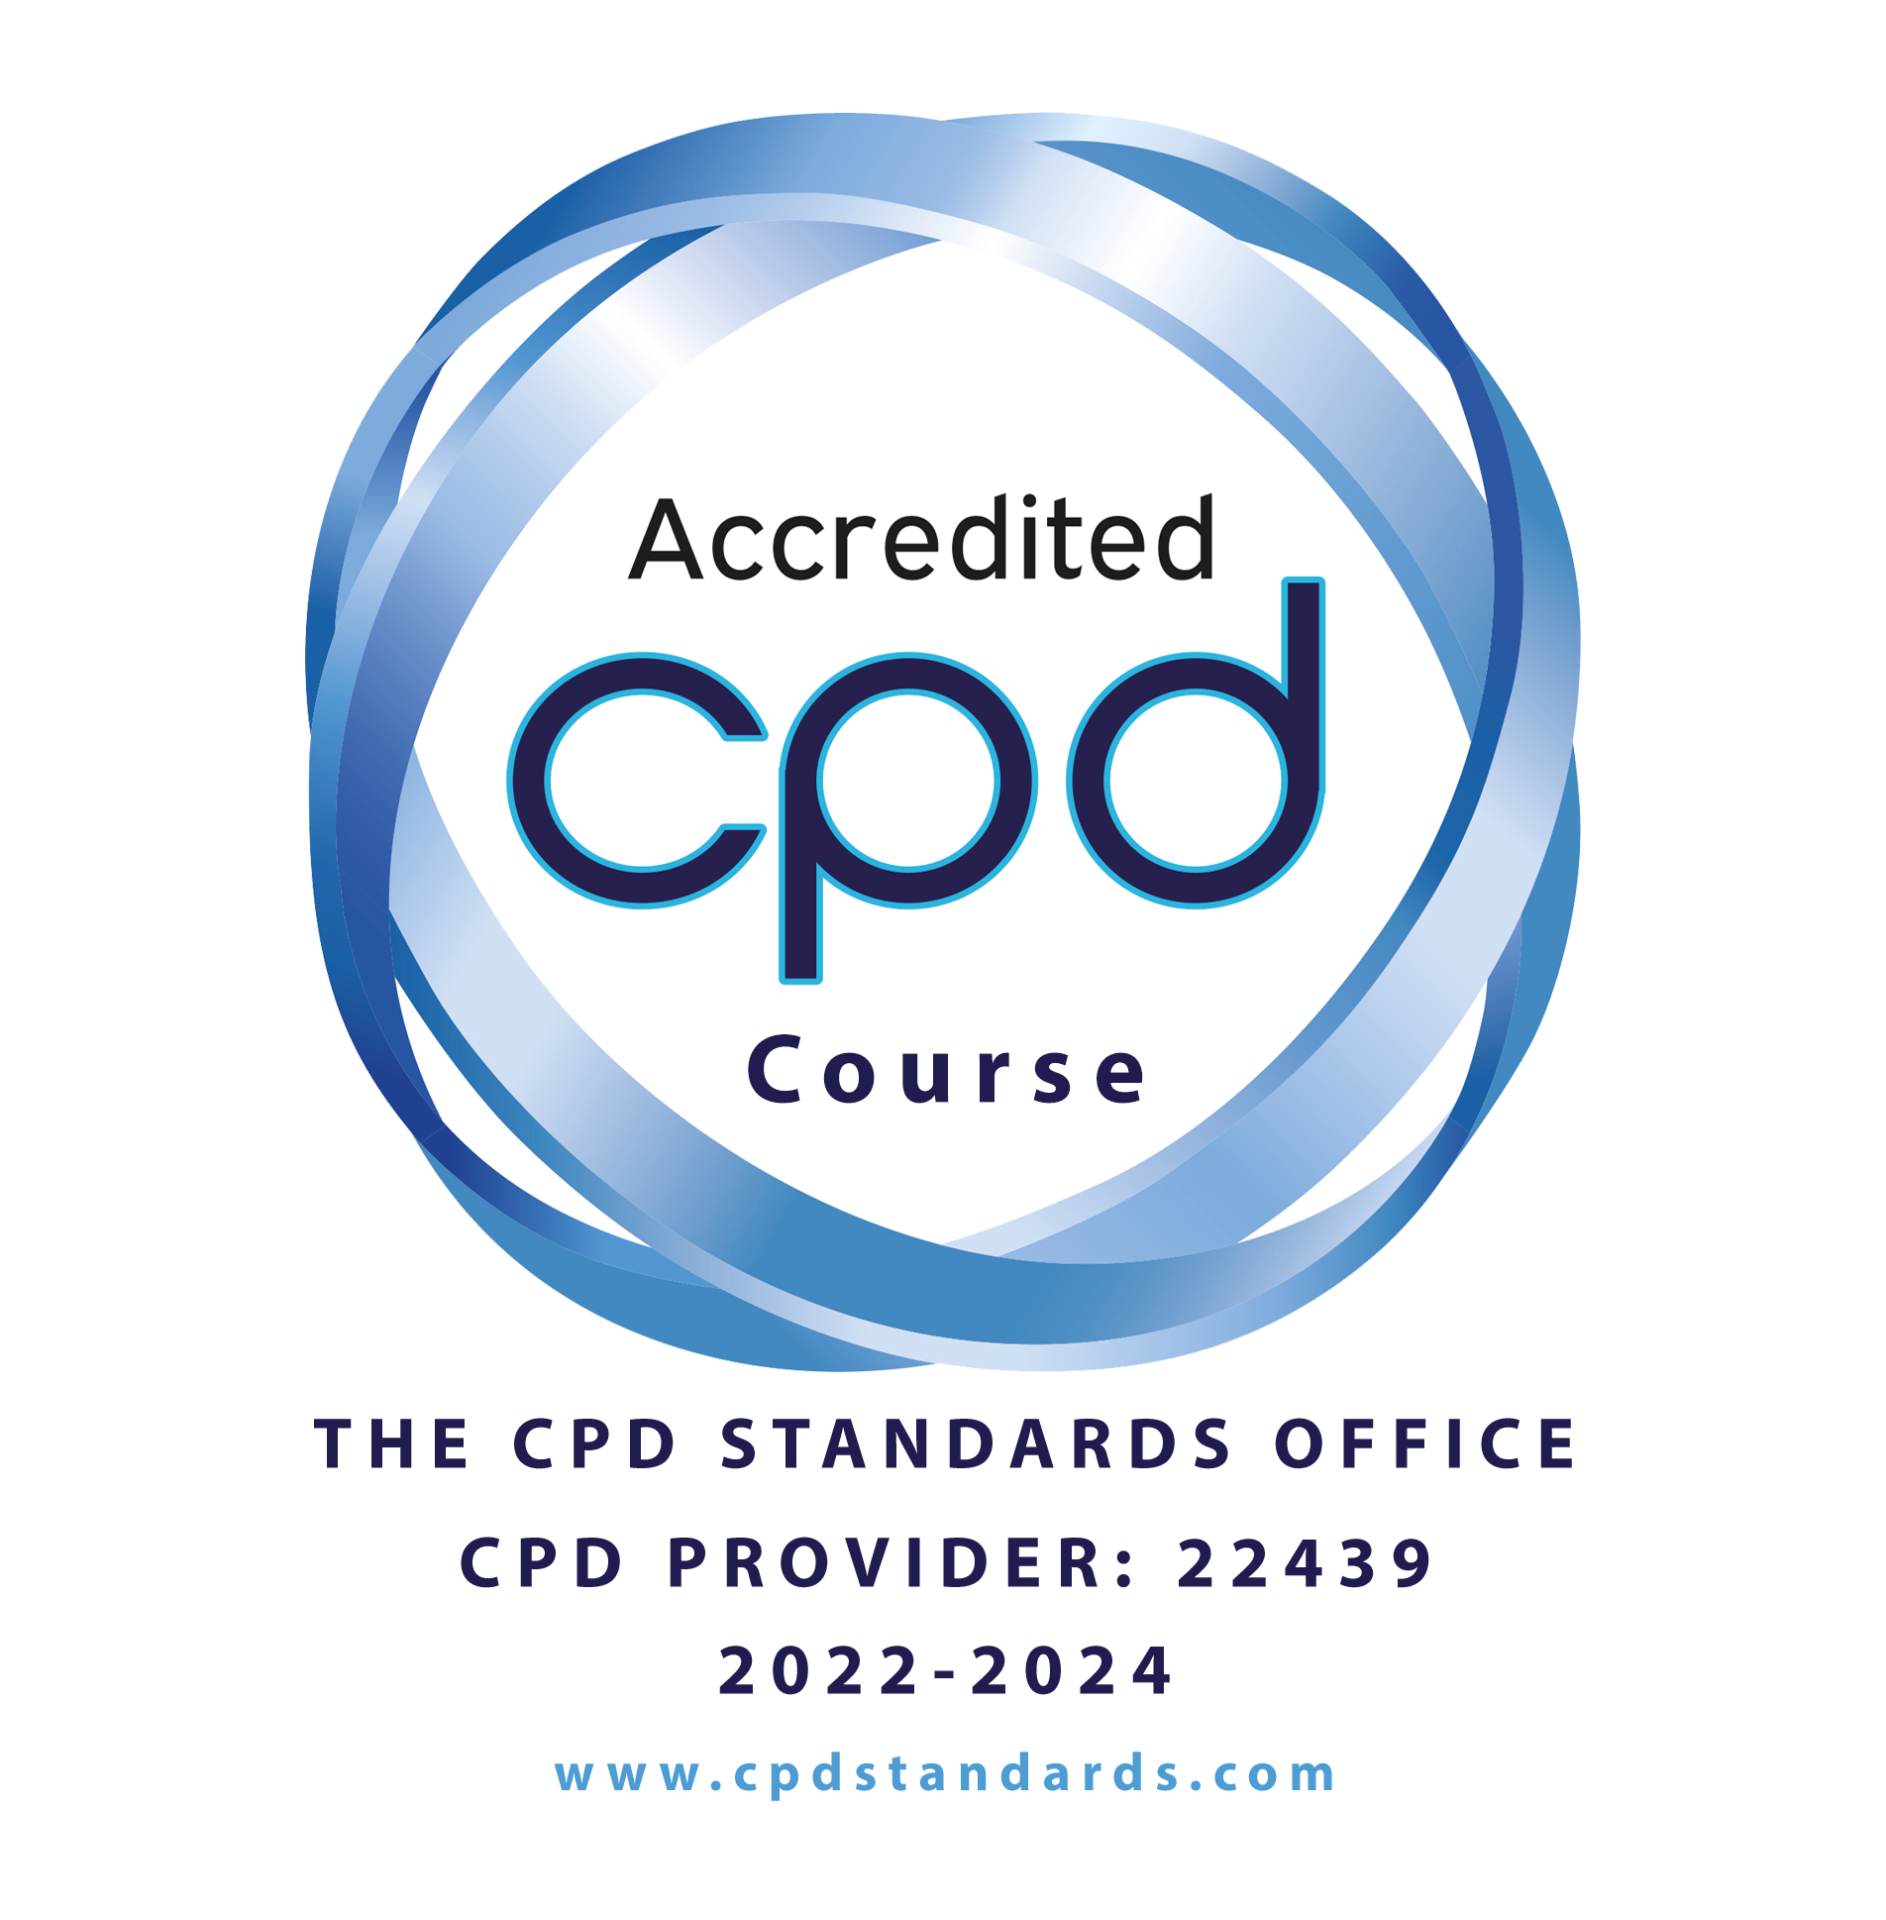 CPD Provider Logo Course 2022 - 2024_CPD PROVIDER- 22439